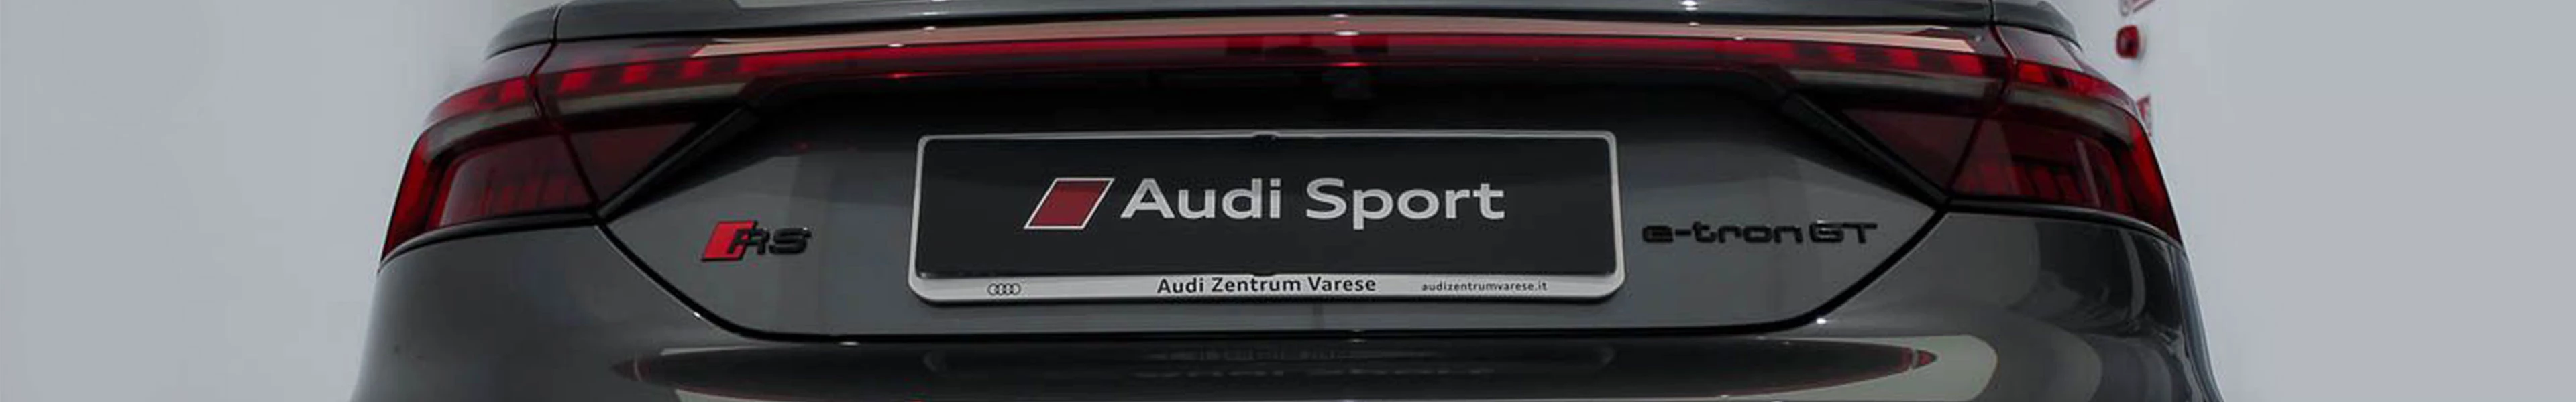 Audi Sport Audi Zentrum Varese 3840